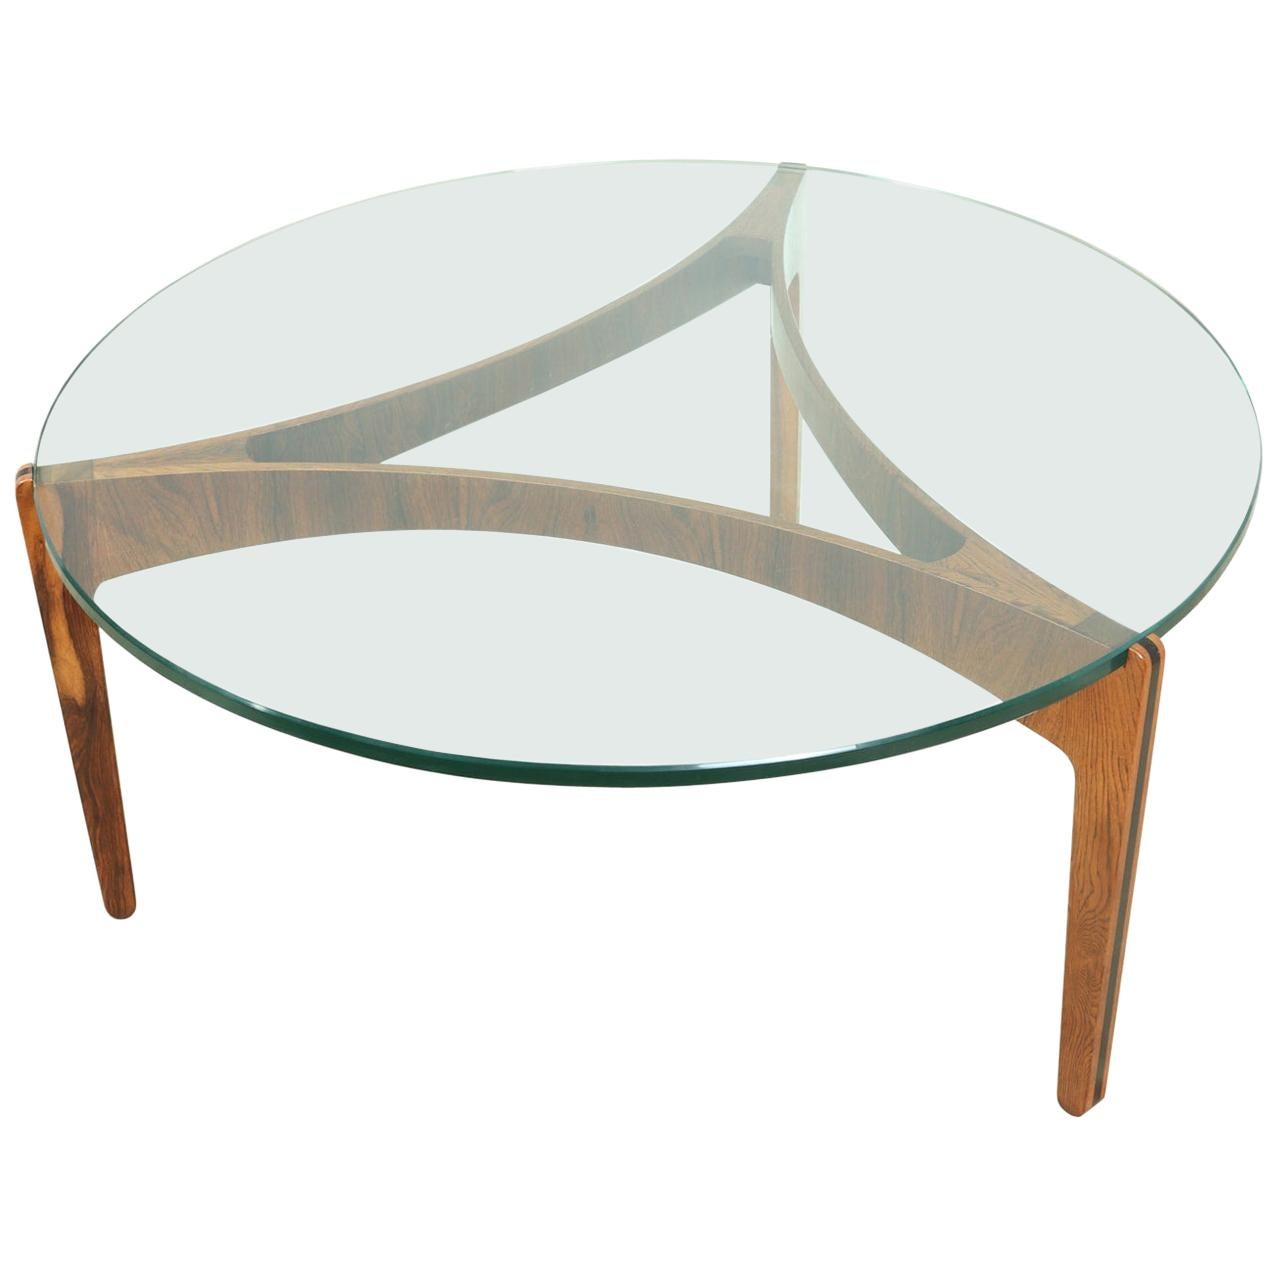 Midcentury Danish Rosewood and Glass Circular Coffee Table by Sven Ellekaer